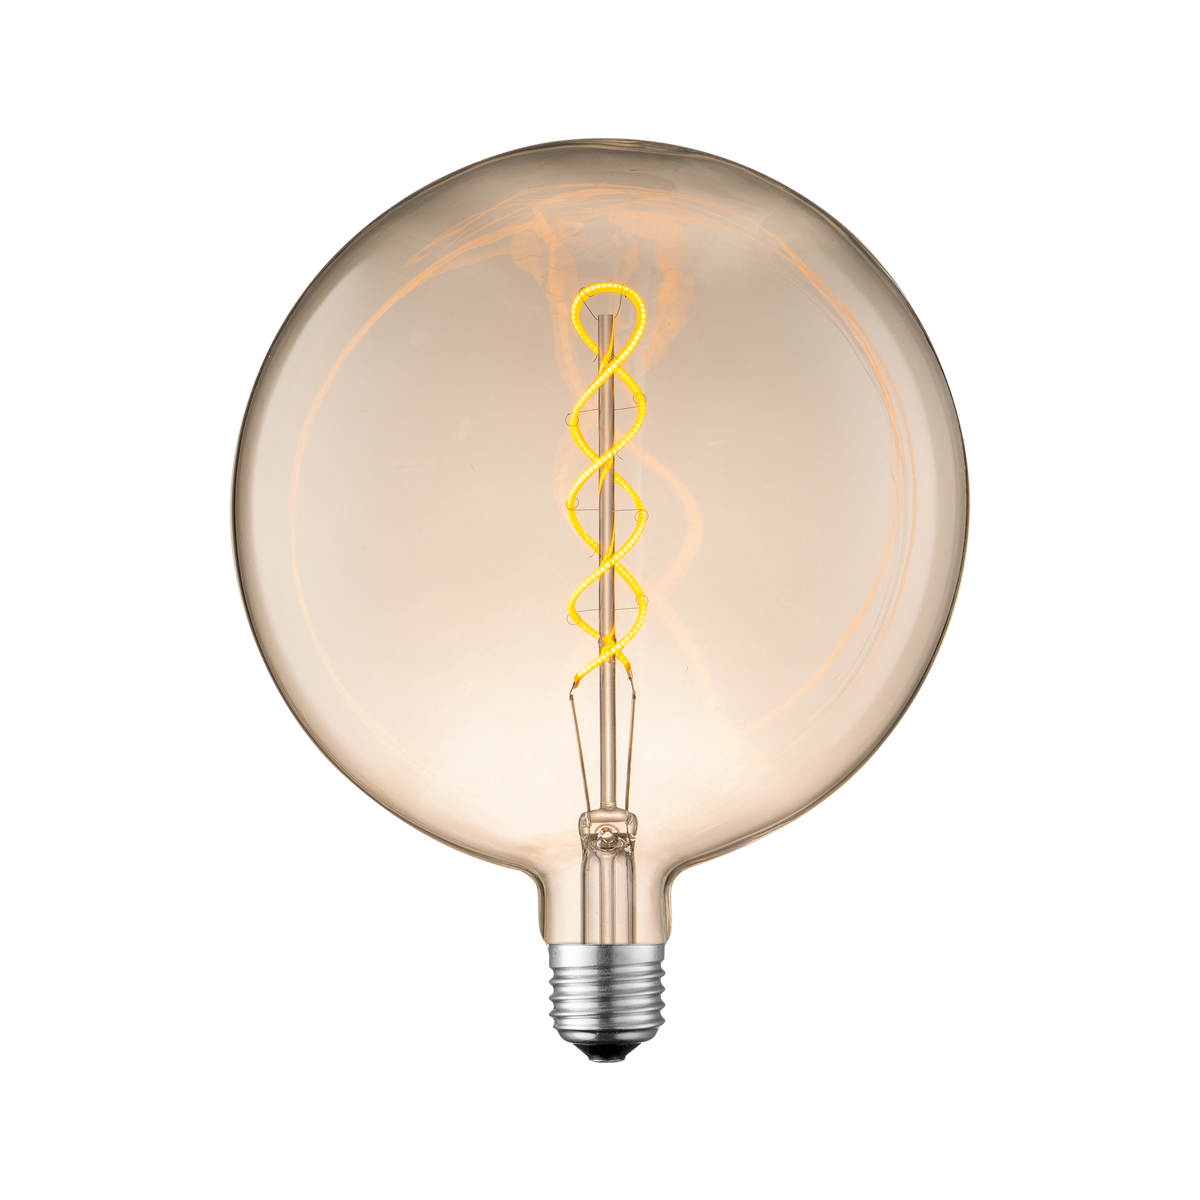 Tangla lighting - TLB-8098-04AM - LED Light Bulb Double Spiral filament - G180 4W amber - medium - dimmabel - E27